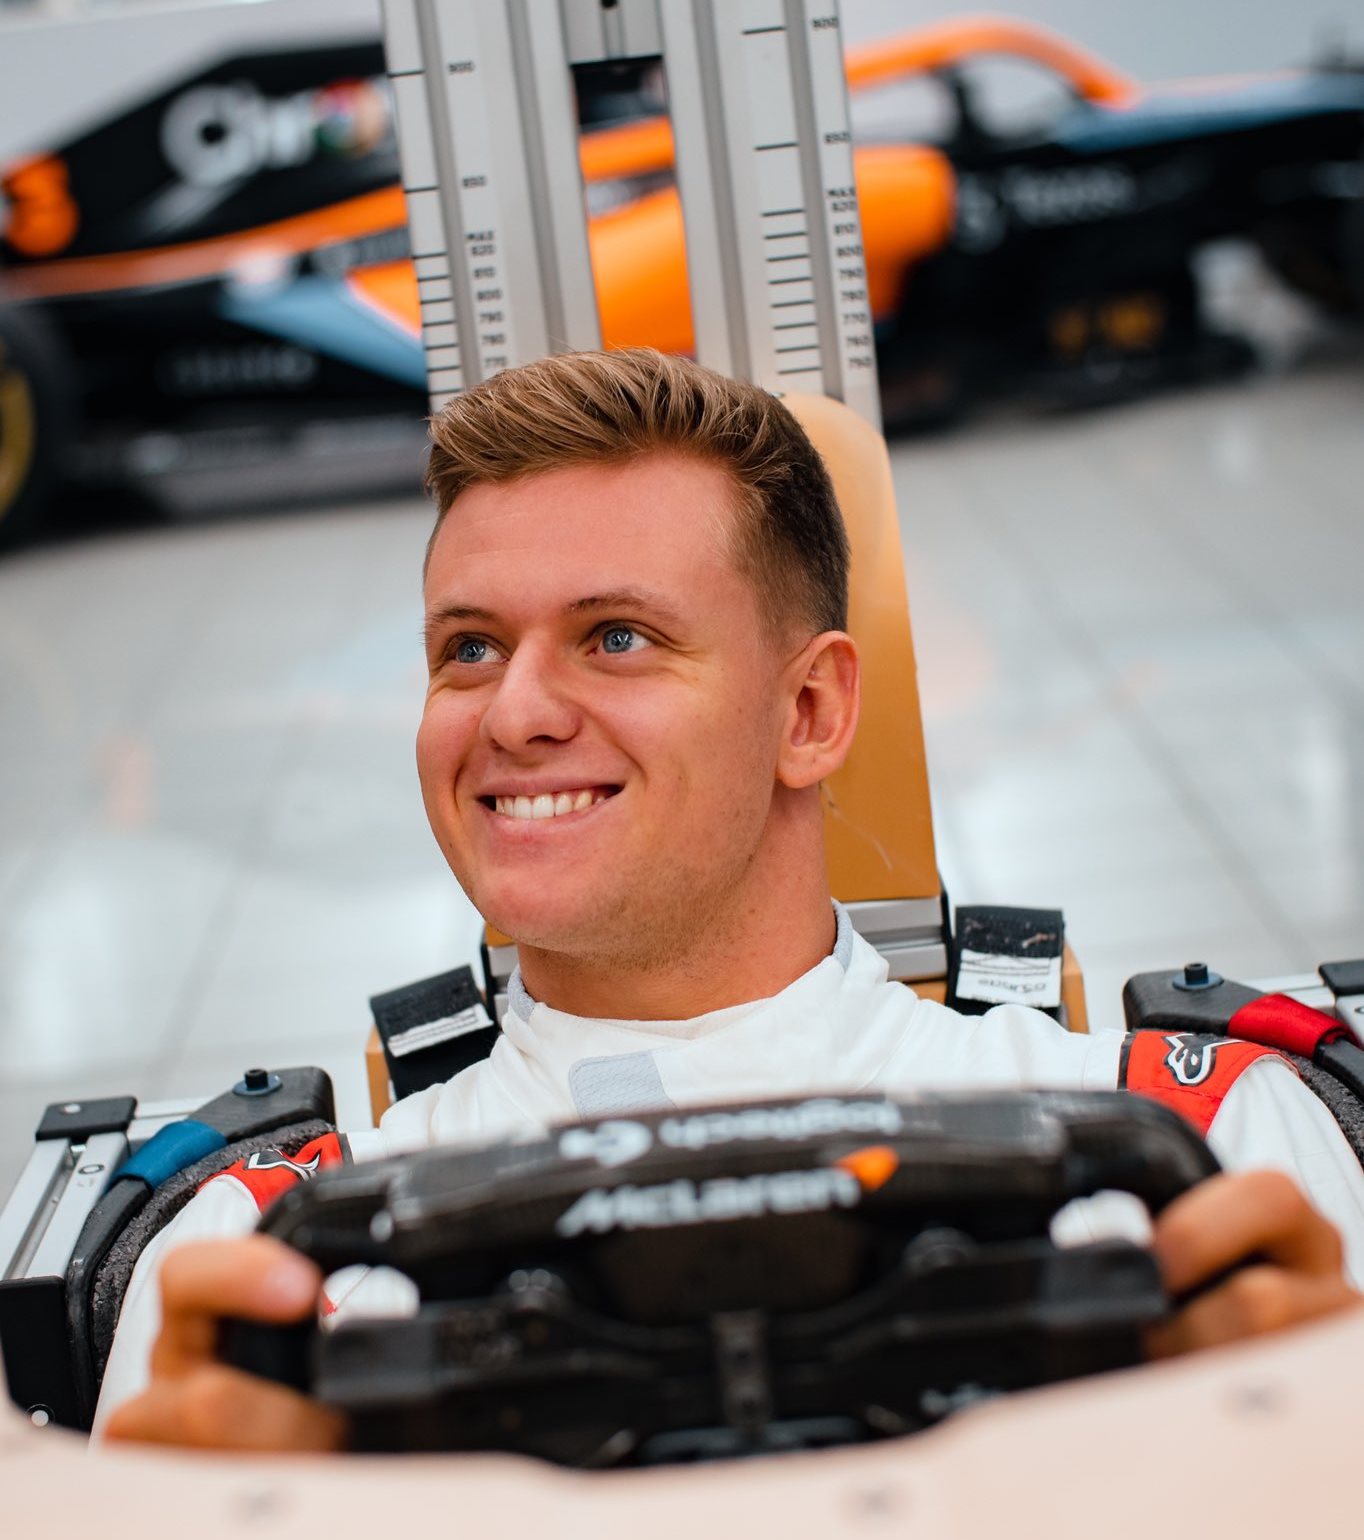 Mick Schumacher getting a McLaren F1 seat fitting